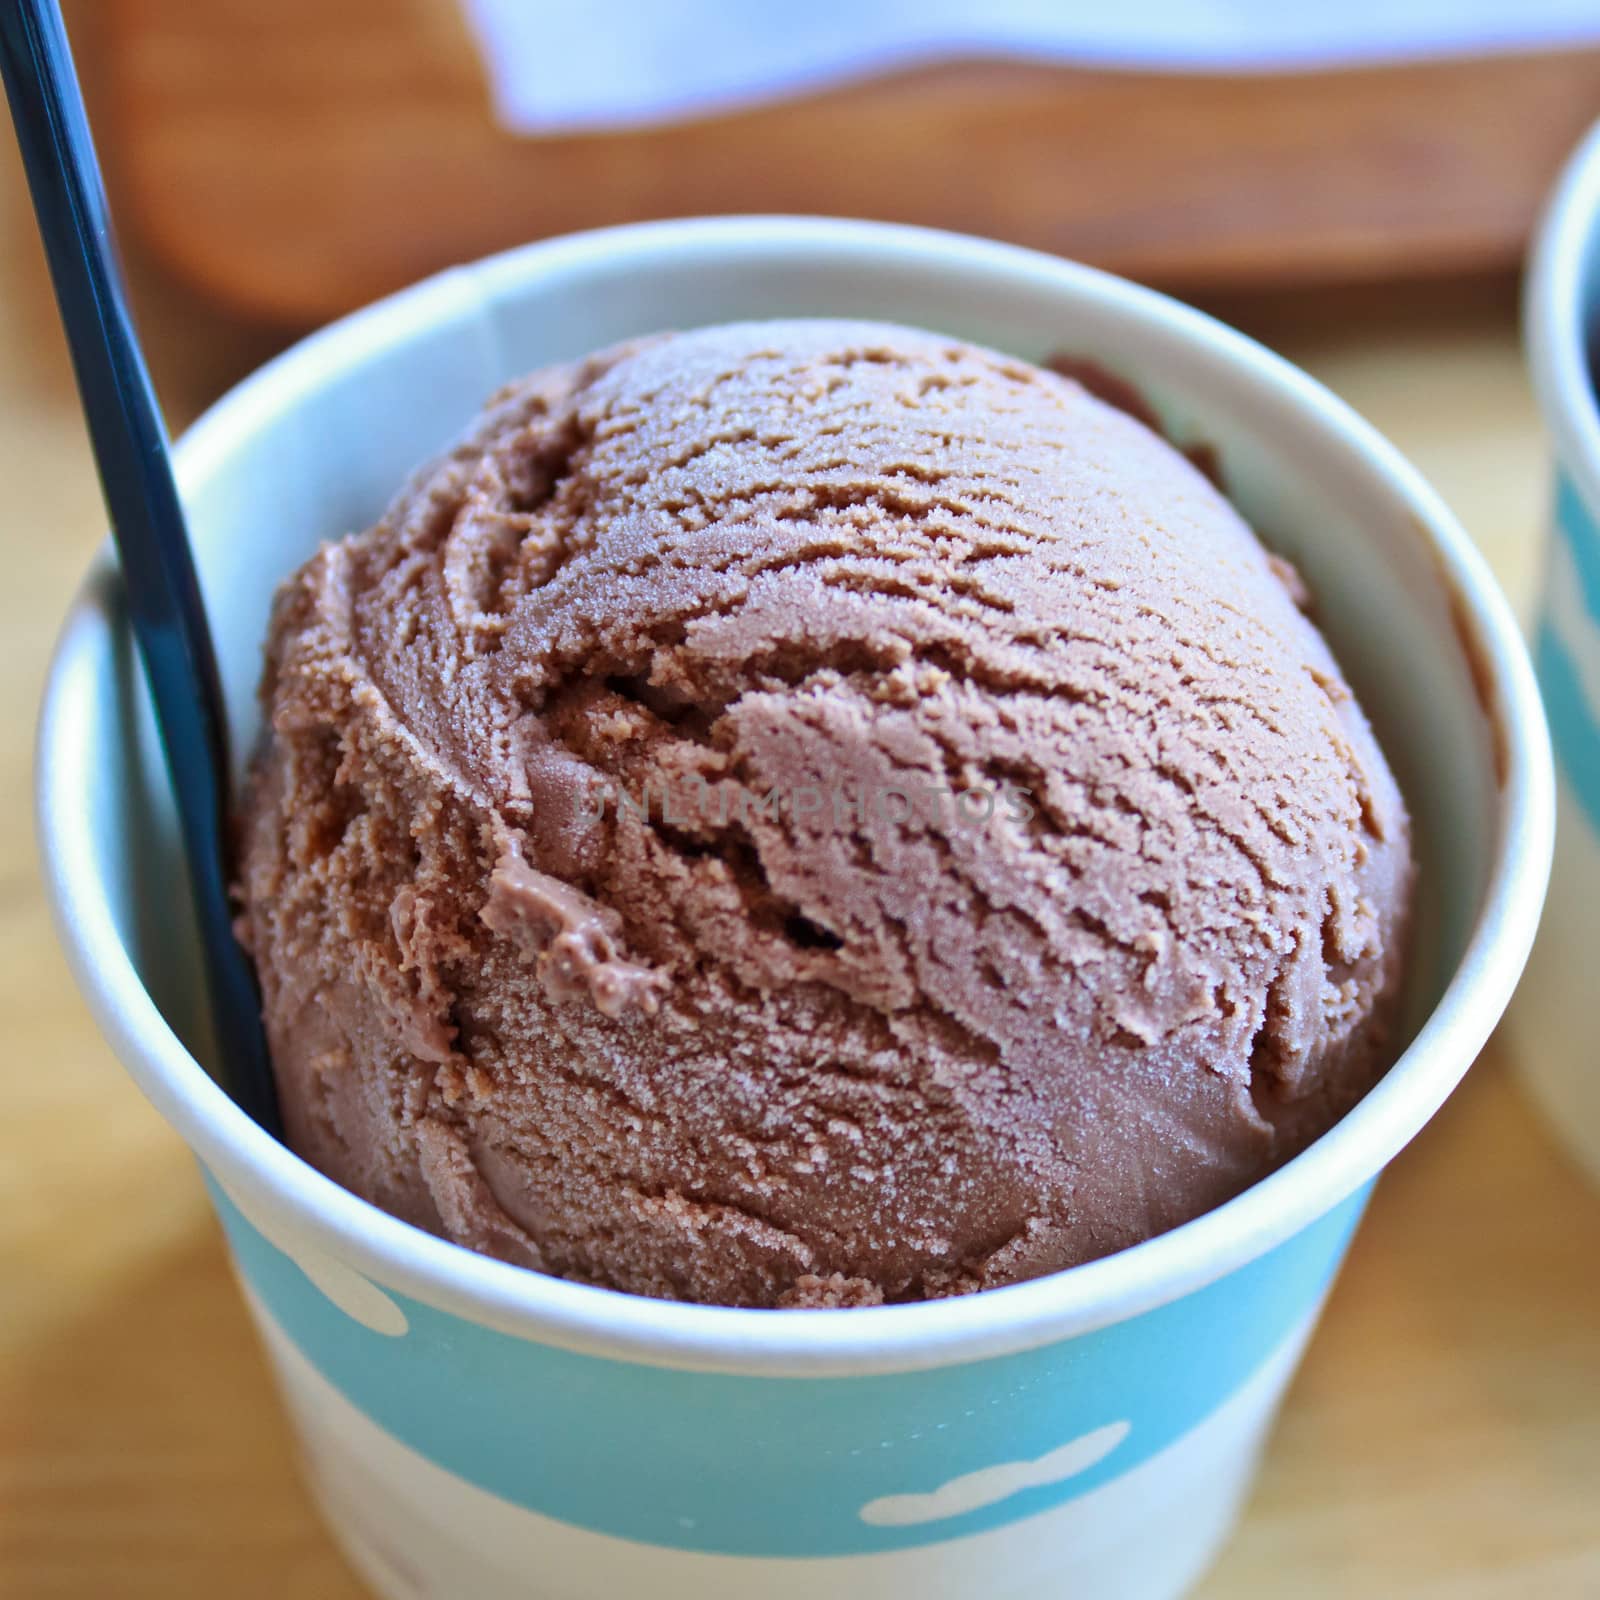 Homemade chocolate ice cream scoop